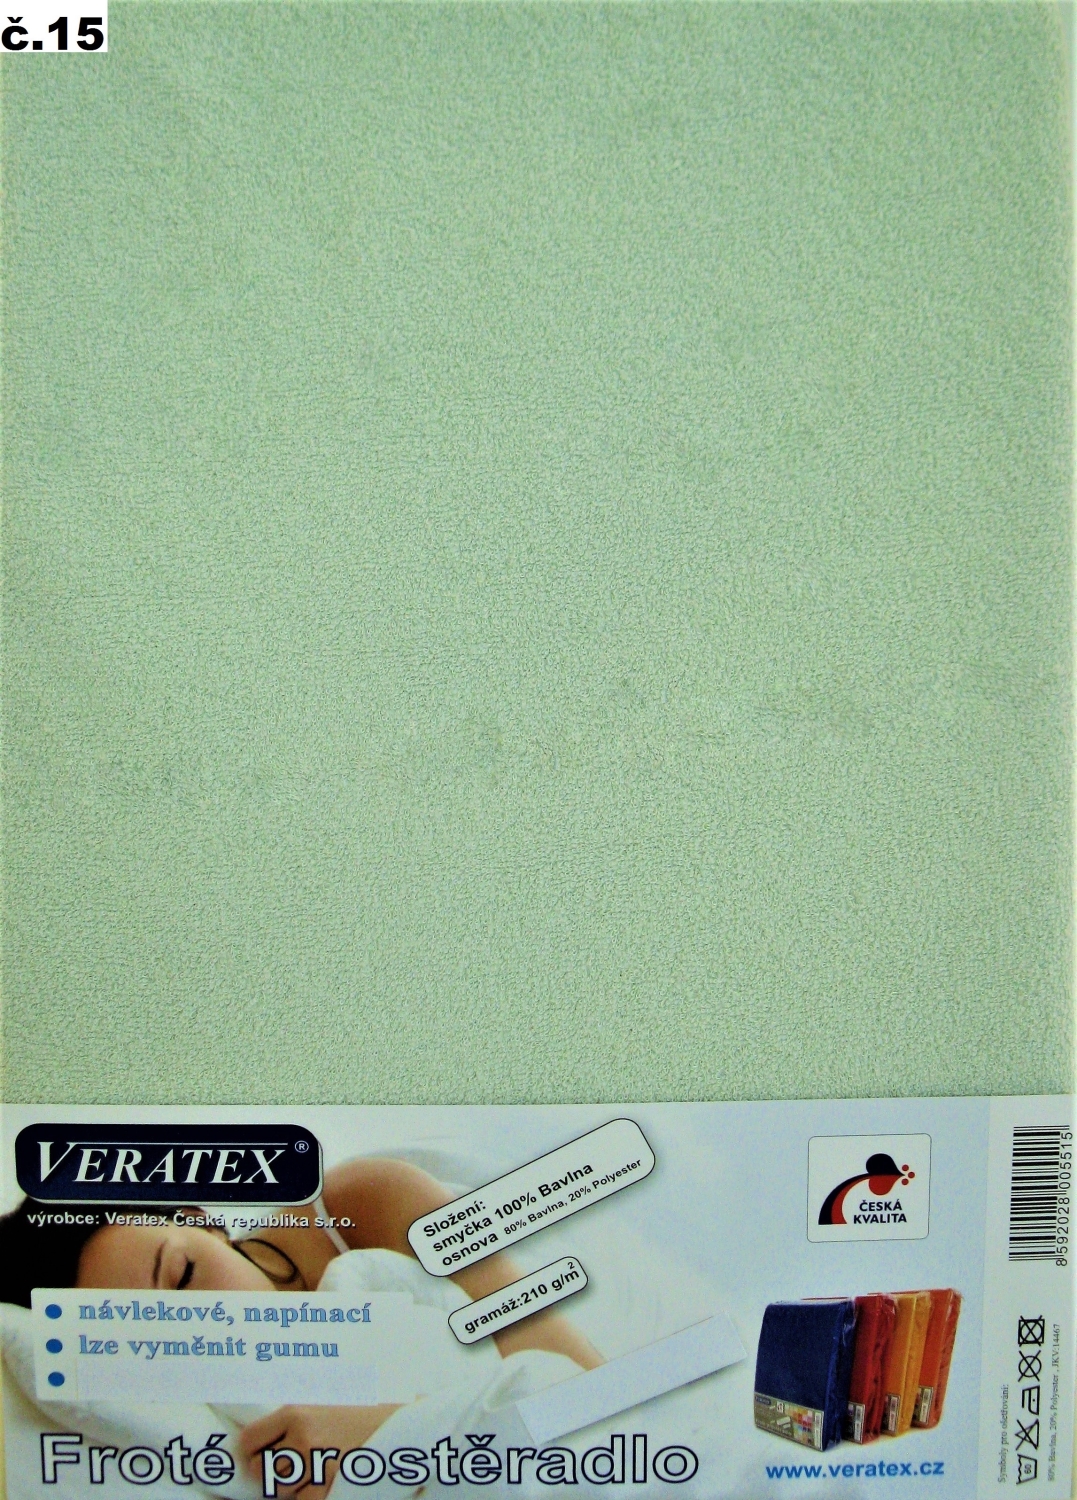 Veratex Froté prostěradlo 140x220/16 cm (č.15 sv.zelená) 140 x 220 cm